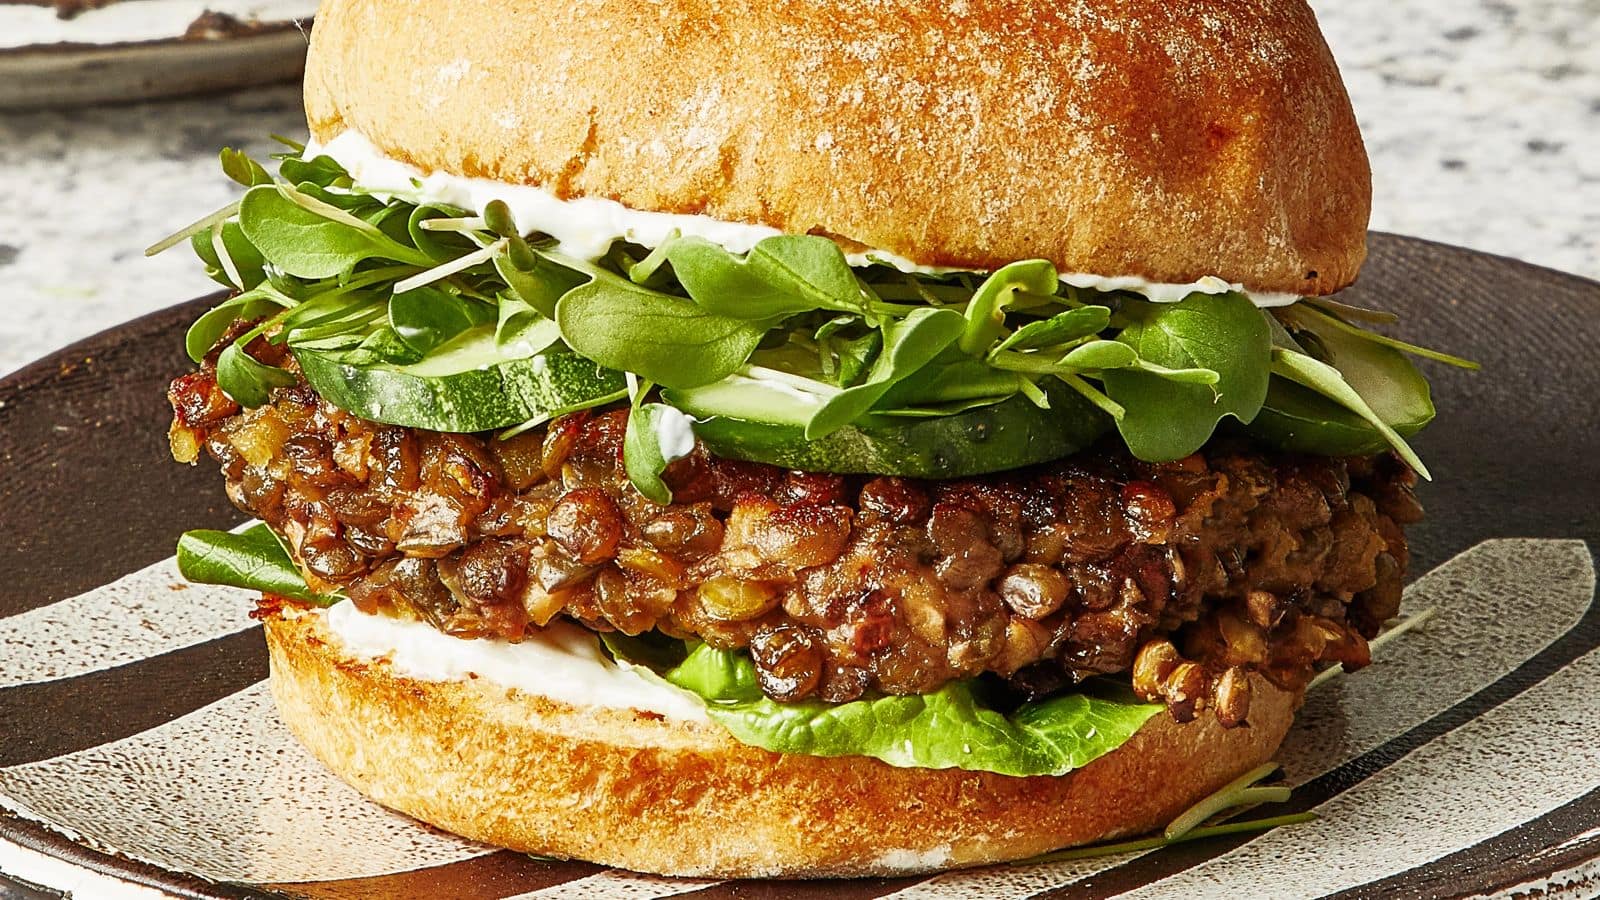 Vegans will love these lentil burgers